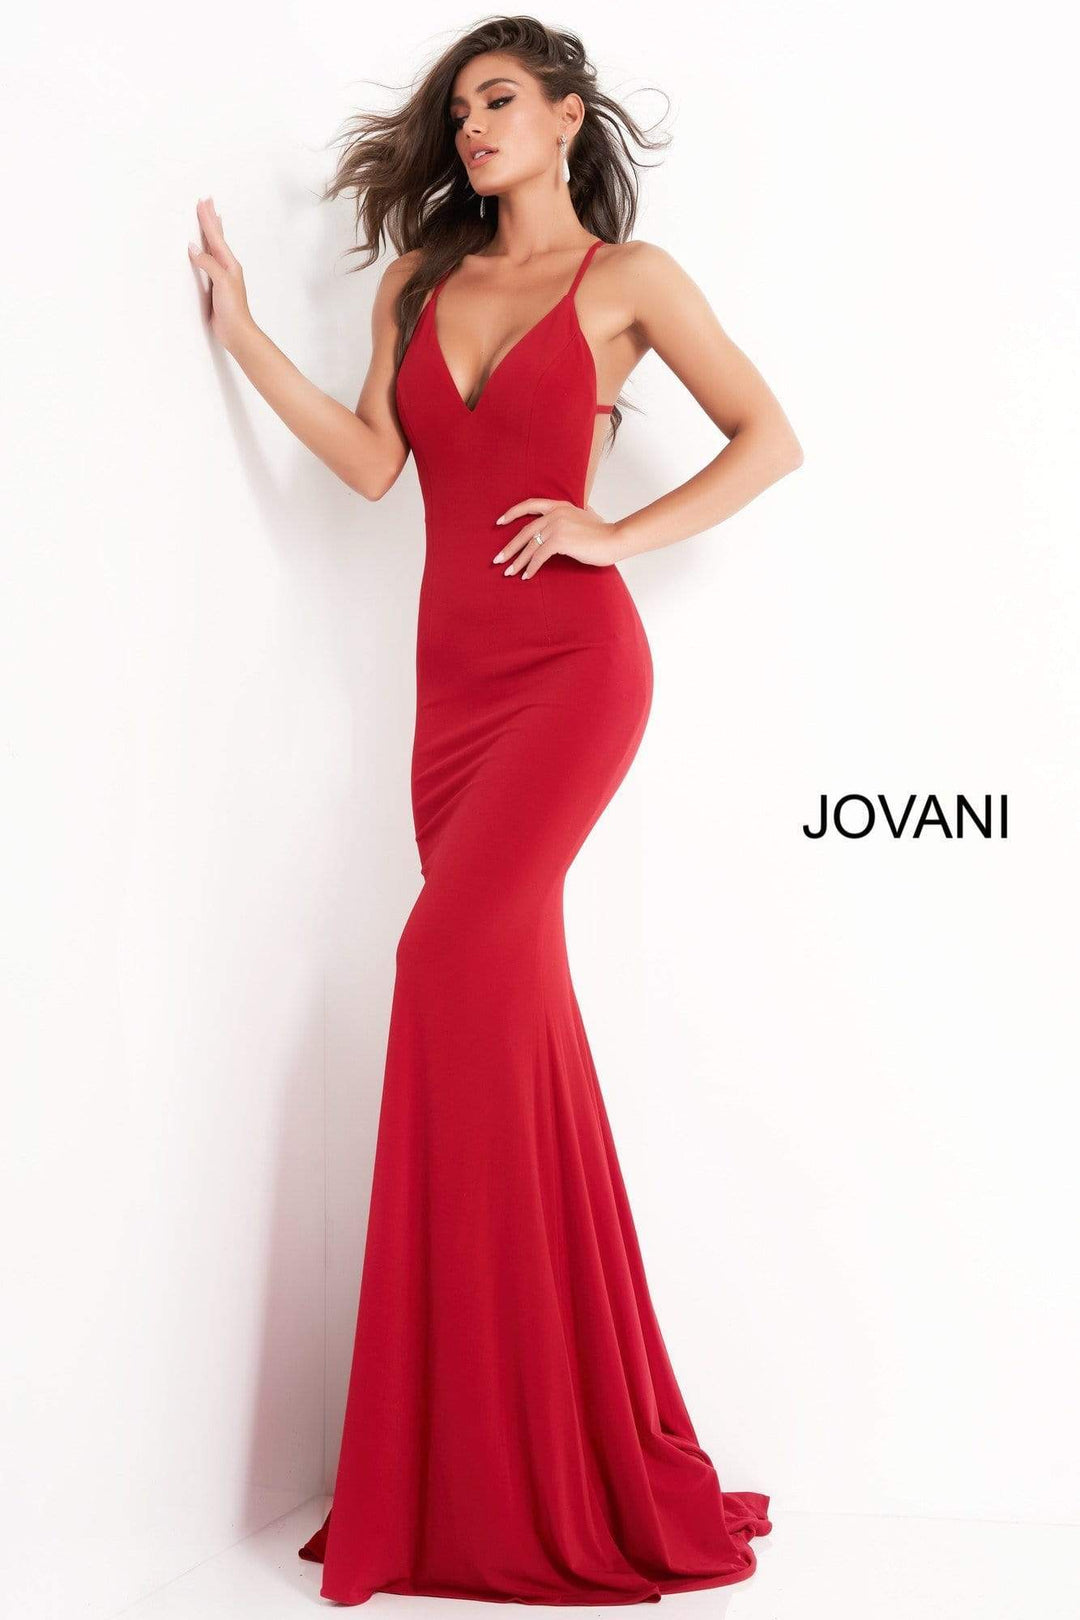 Jovani 512 Dress - FOSTANI